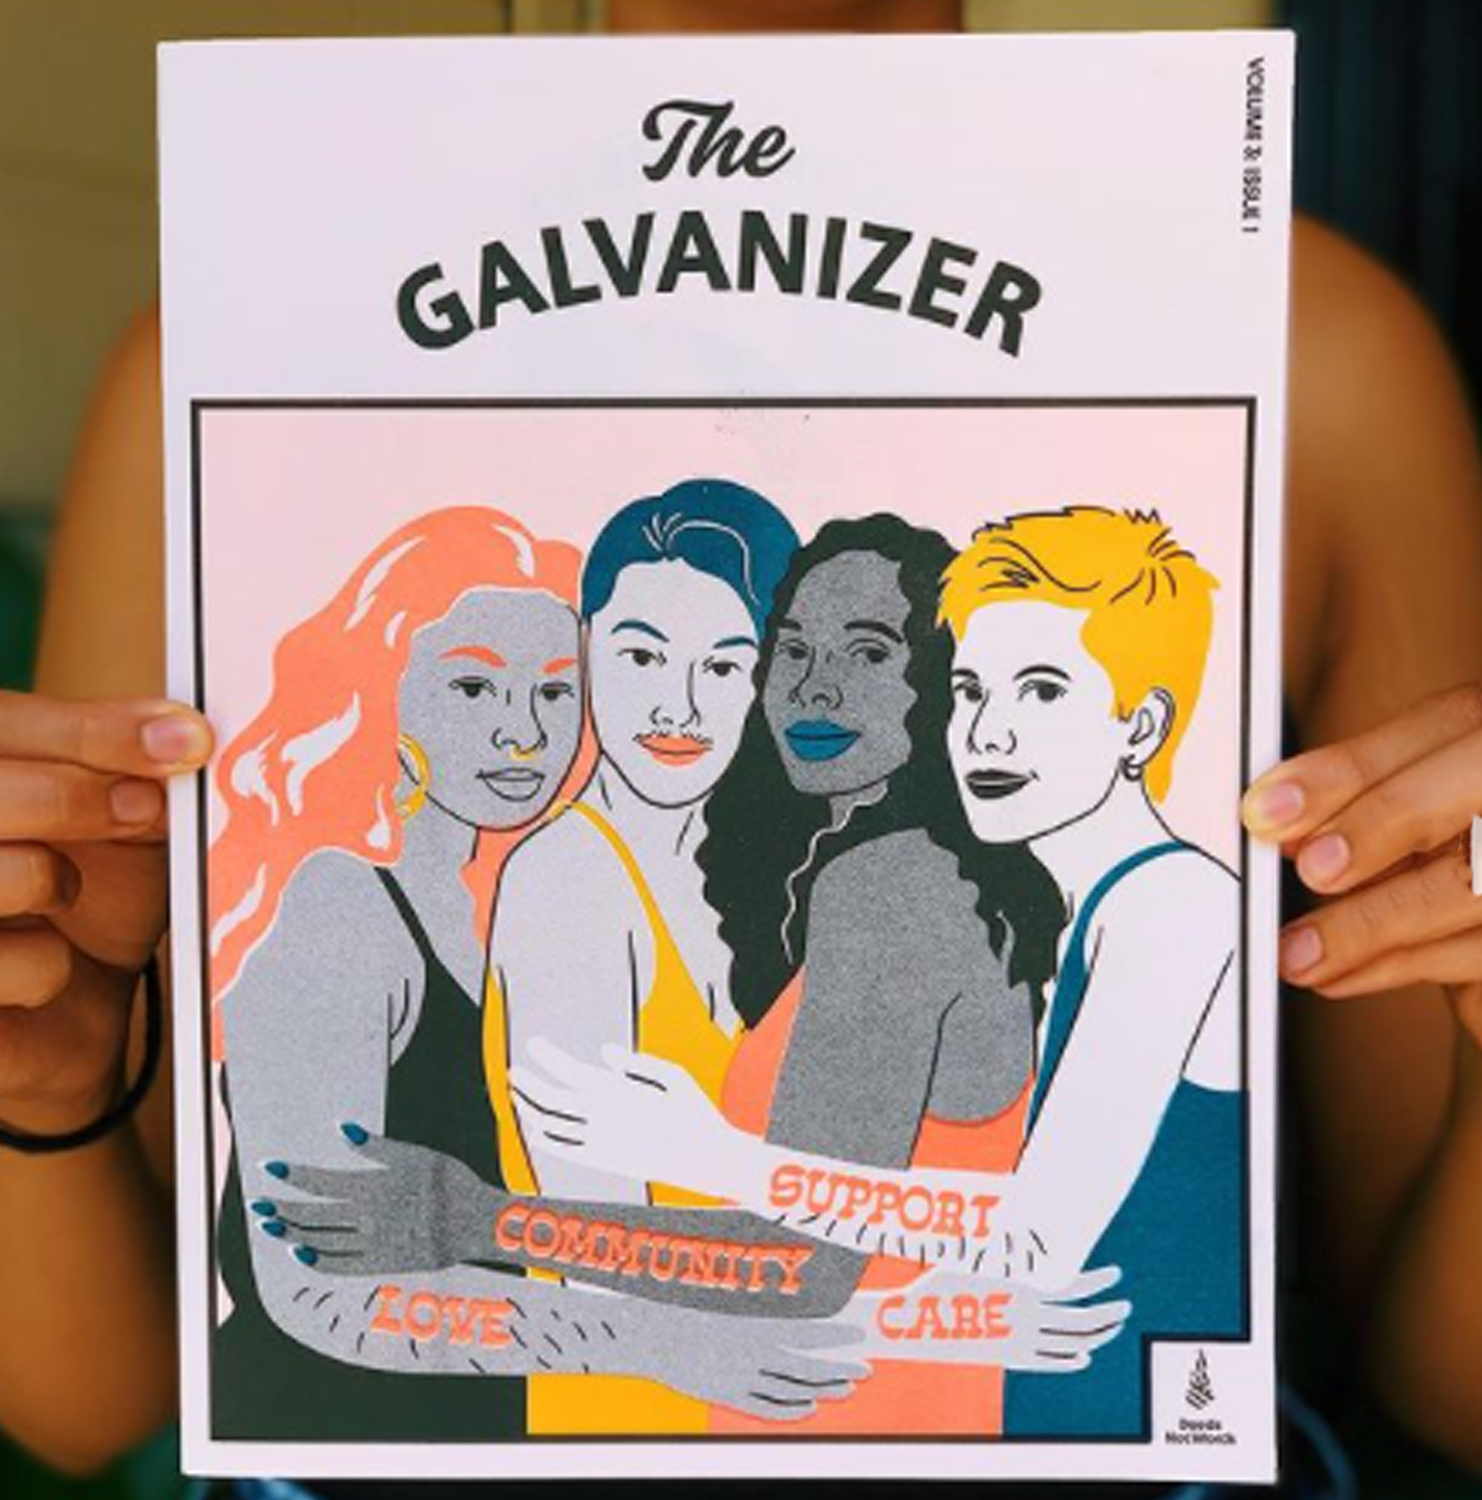 Close-up of person holding The Galvanizer magazine